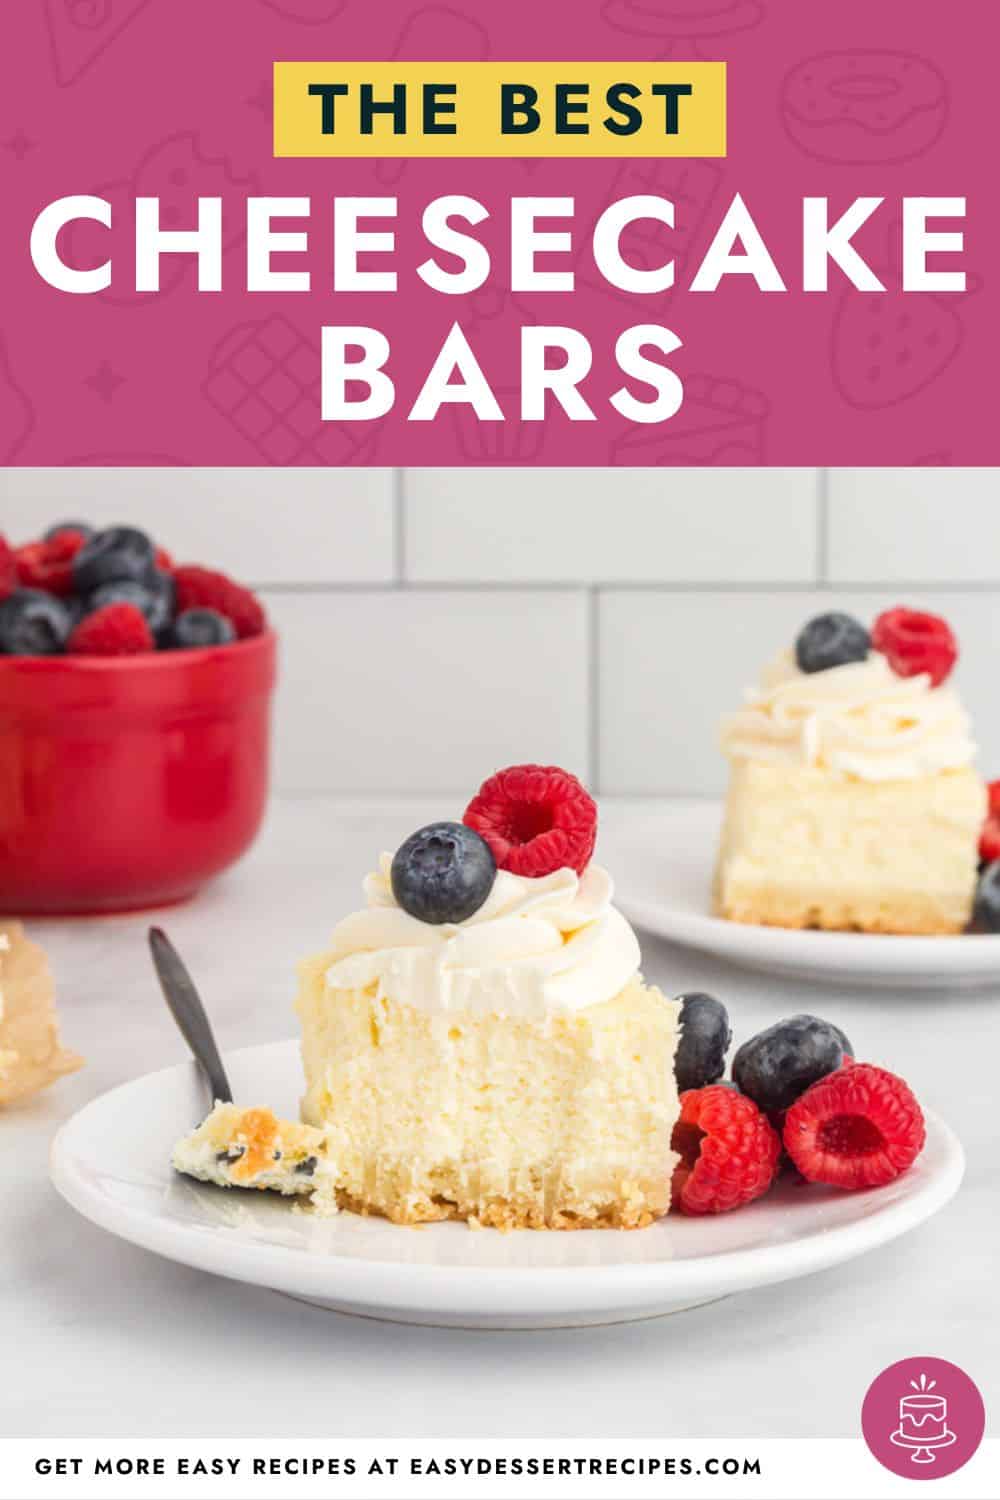 The best cheesecake bars.